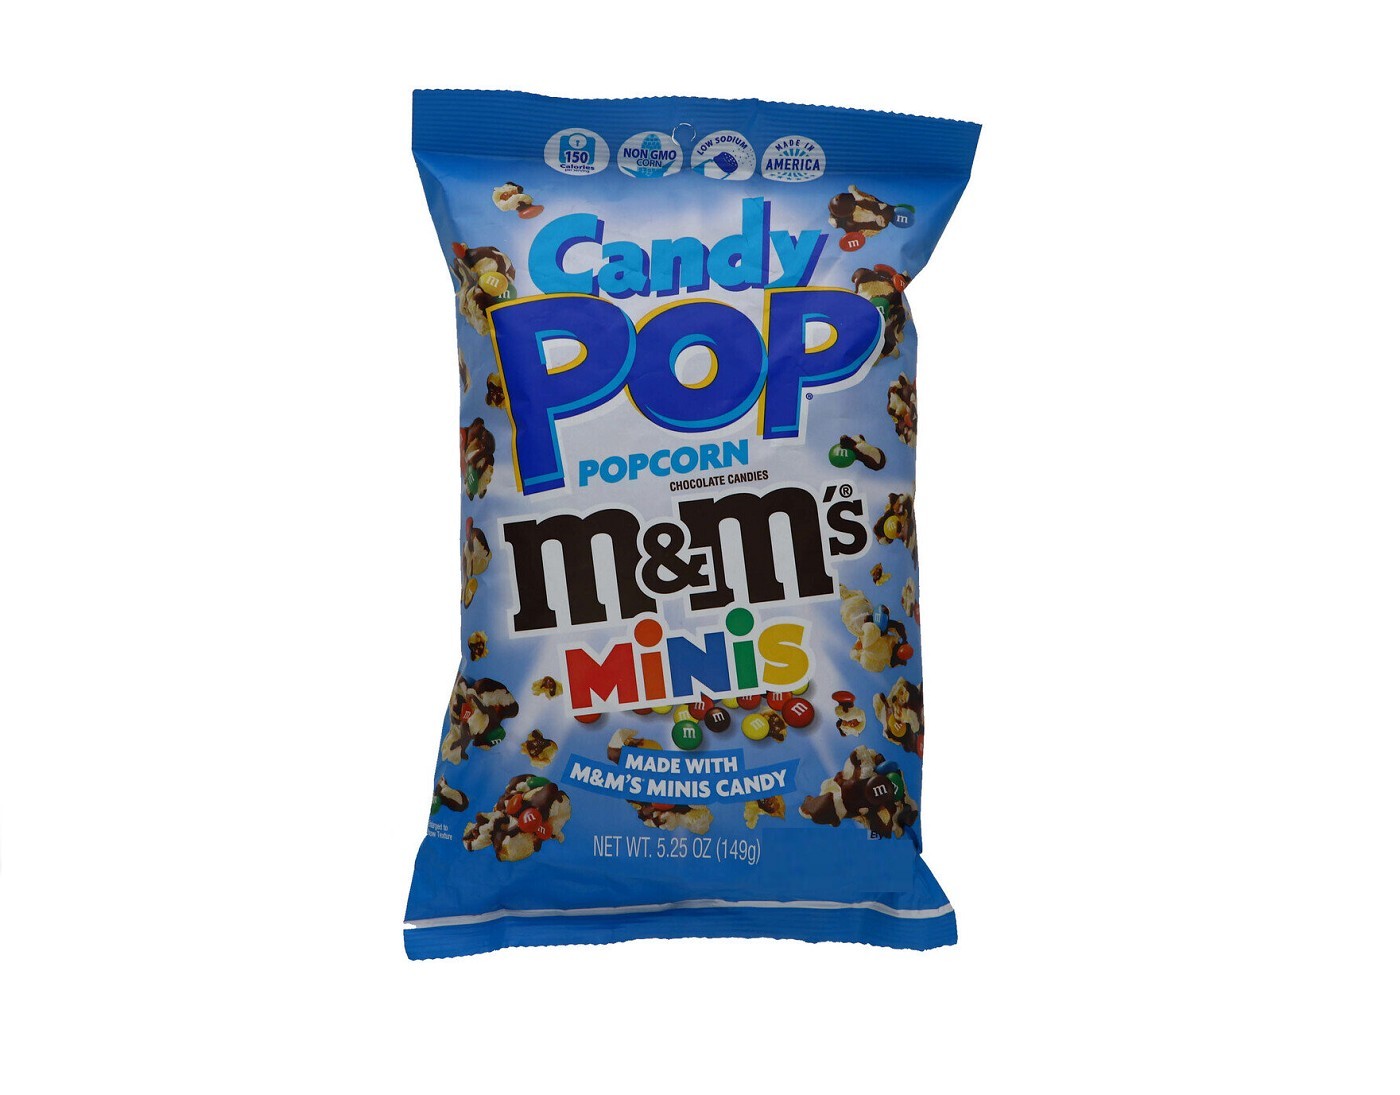 Candy Pop Popcorn M&M’s minis 149g